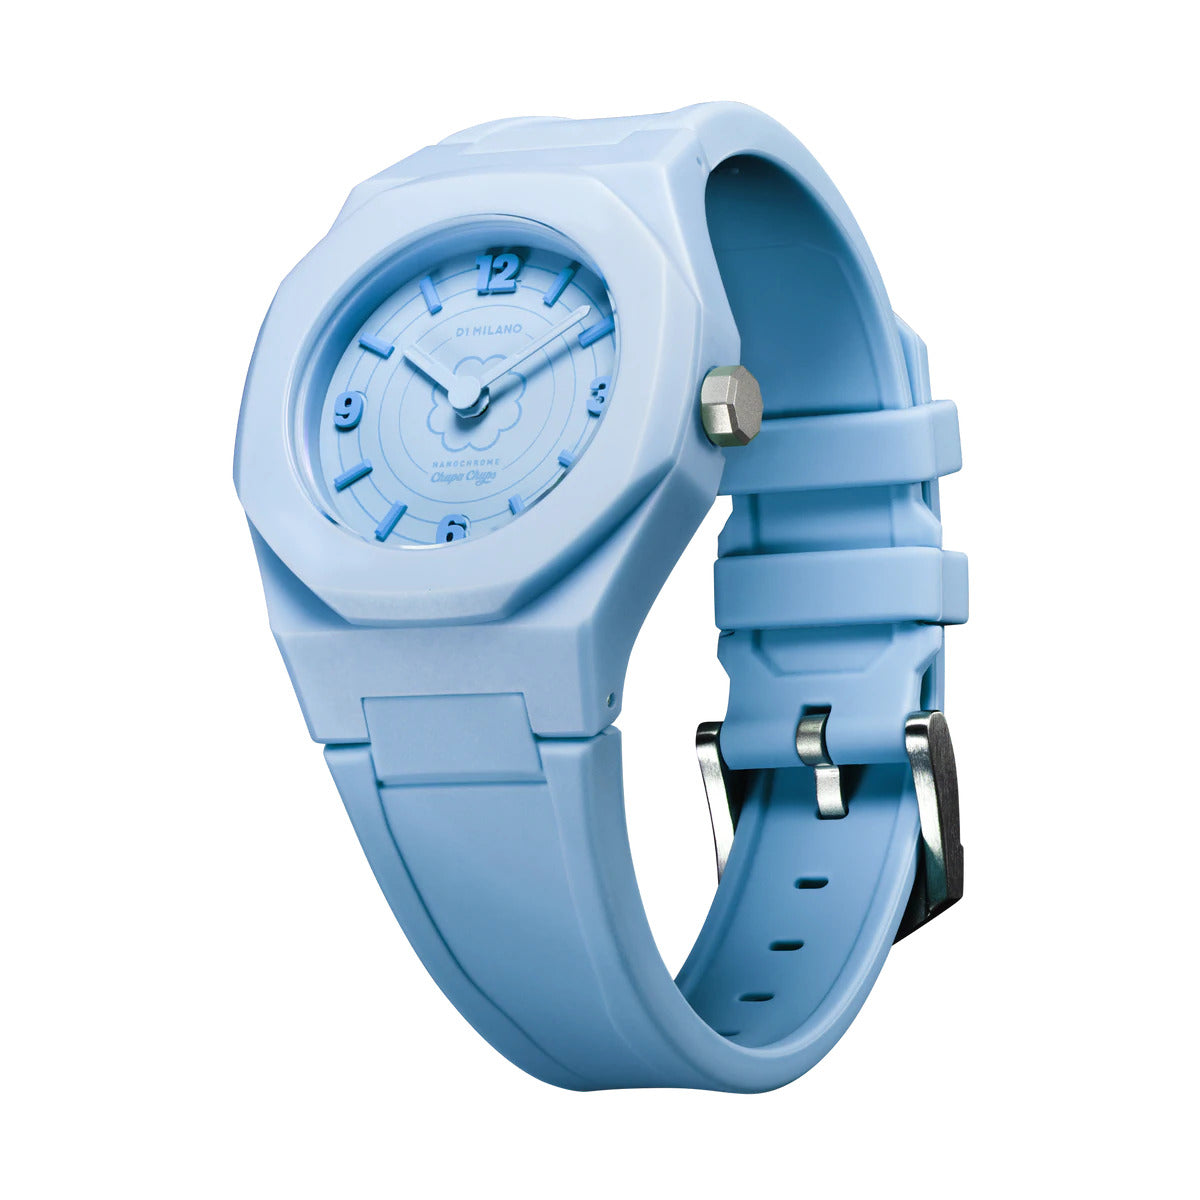 D1 Milano Quartz Watch with Blue Dial - ML-0260